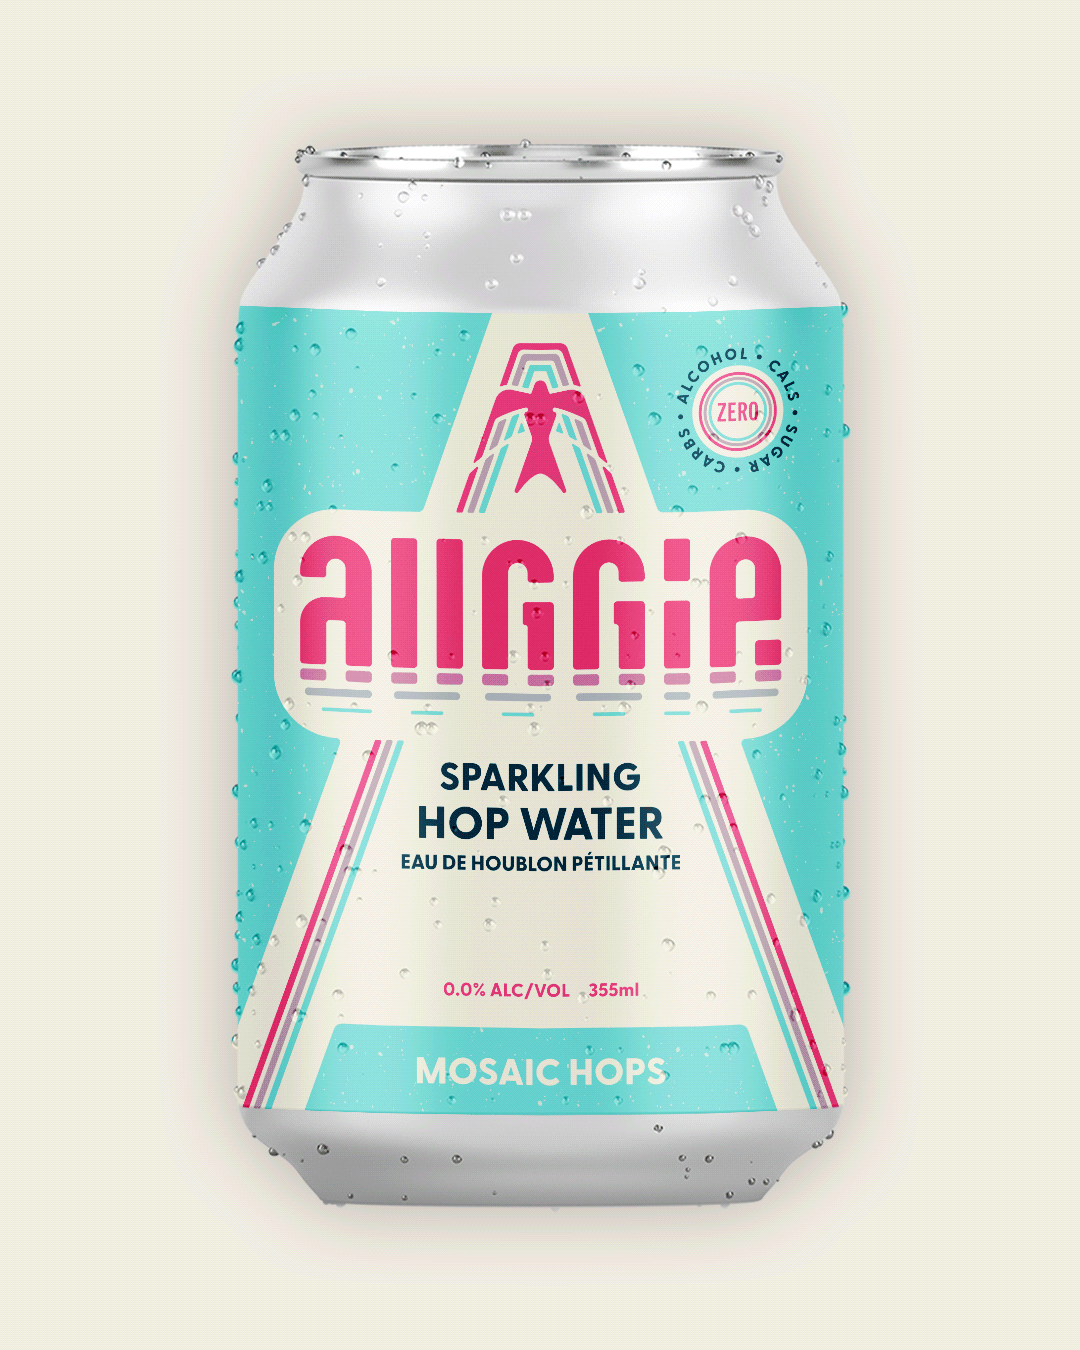 Auggie Sparkling Hop Water: Mosaic Hops aluminum can mockup